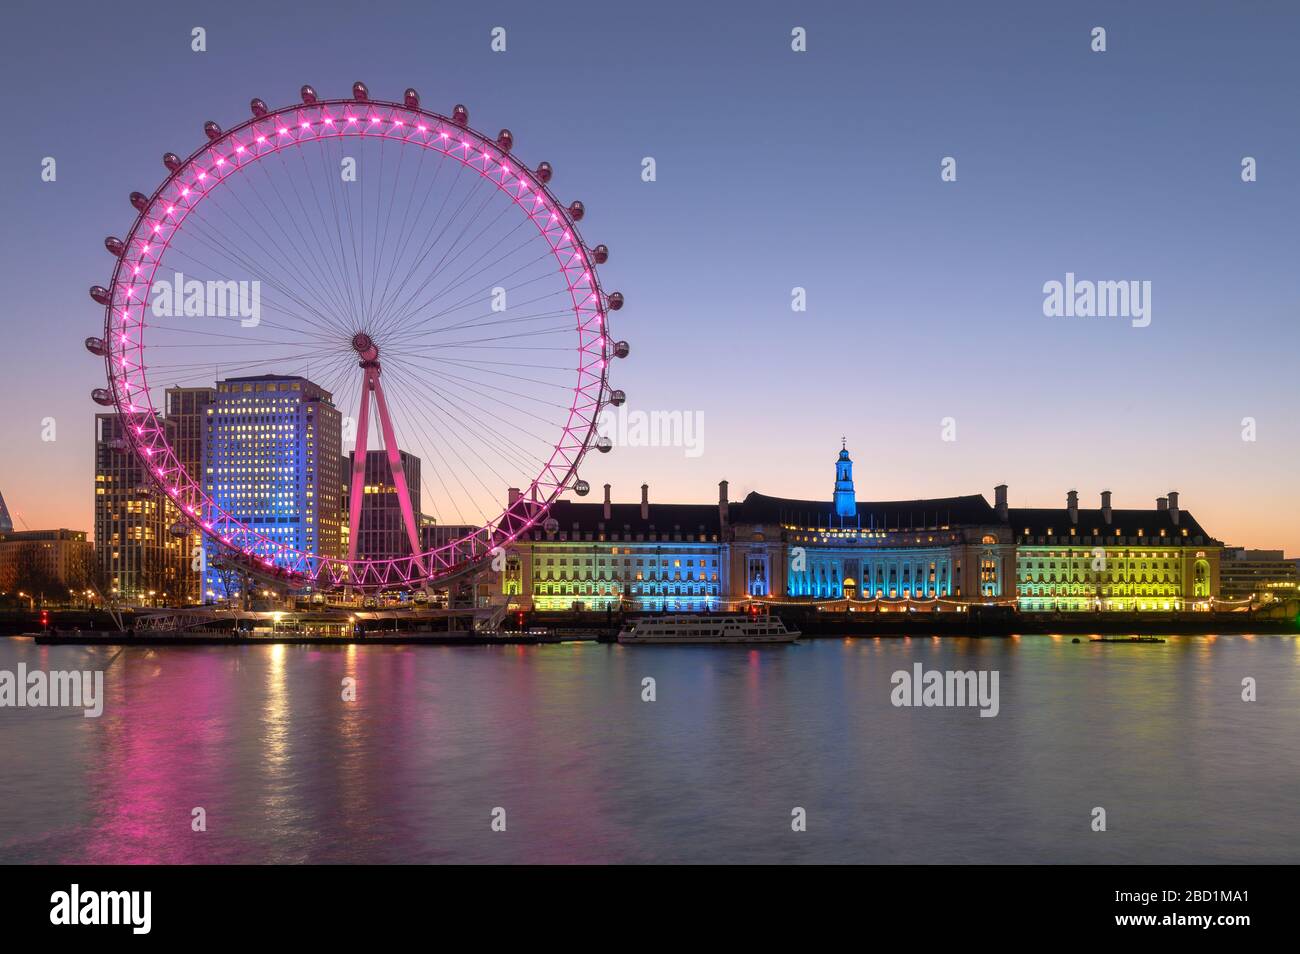 Millennium Wheel (London Eye), Old County Hall, River Thames, South Bank, Londra, Inghilterra, Regno Unito, Europa Foto Stock